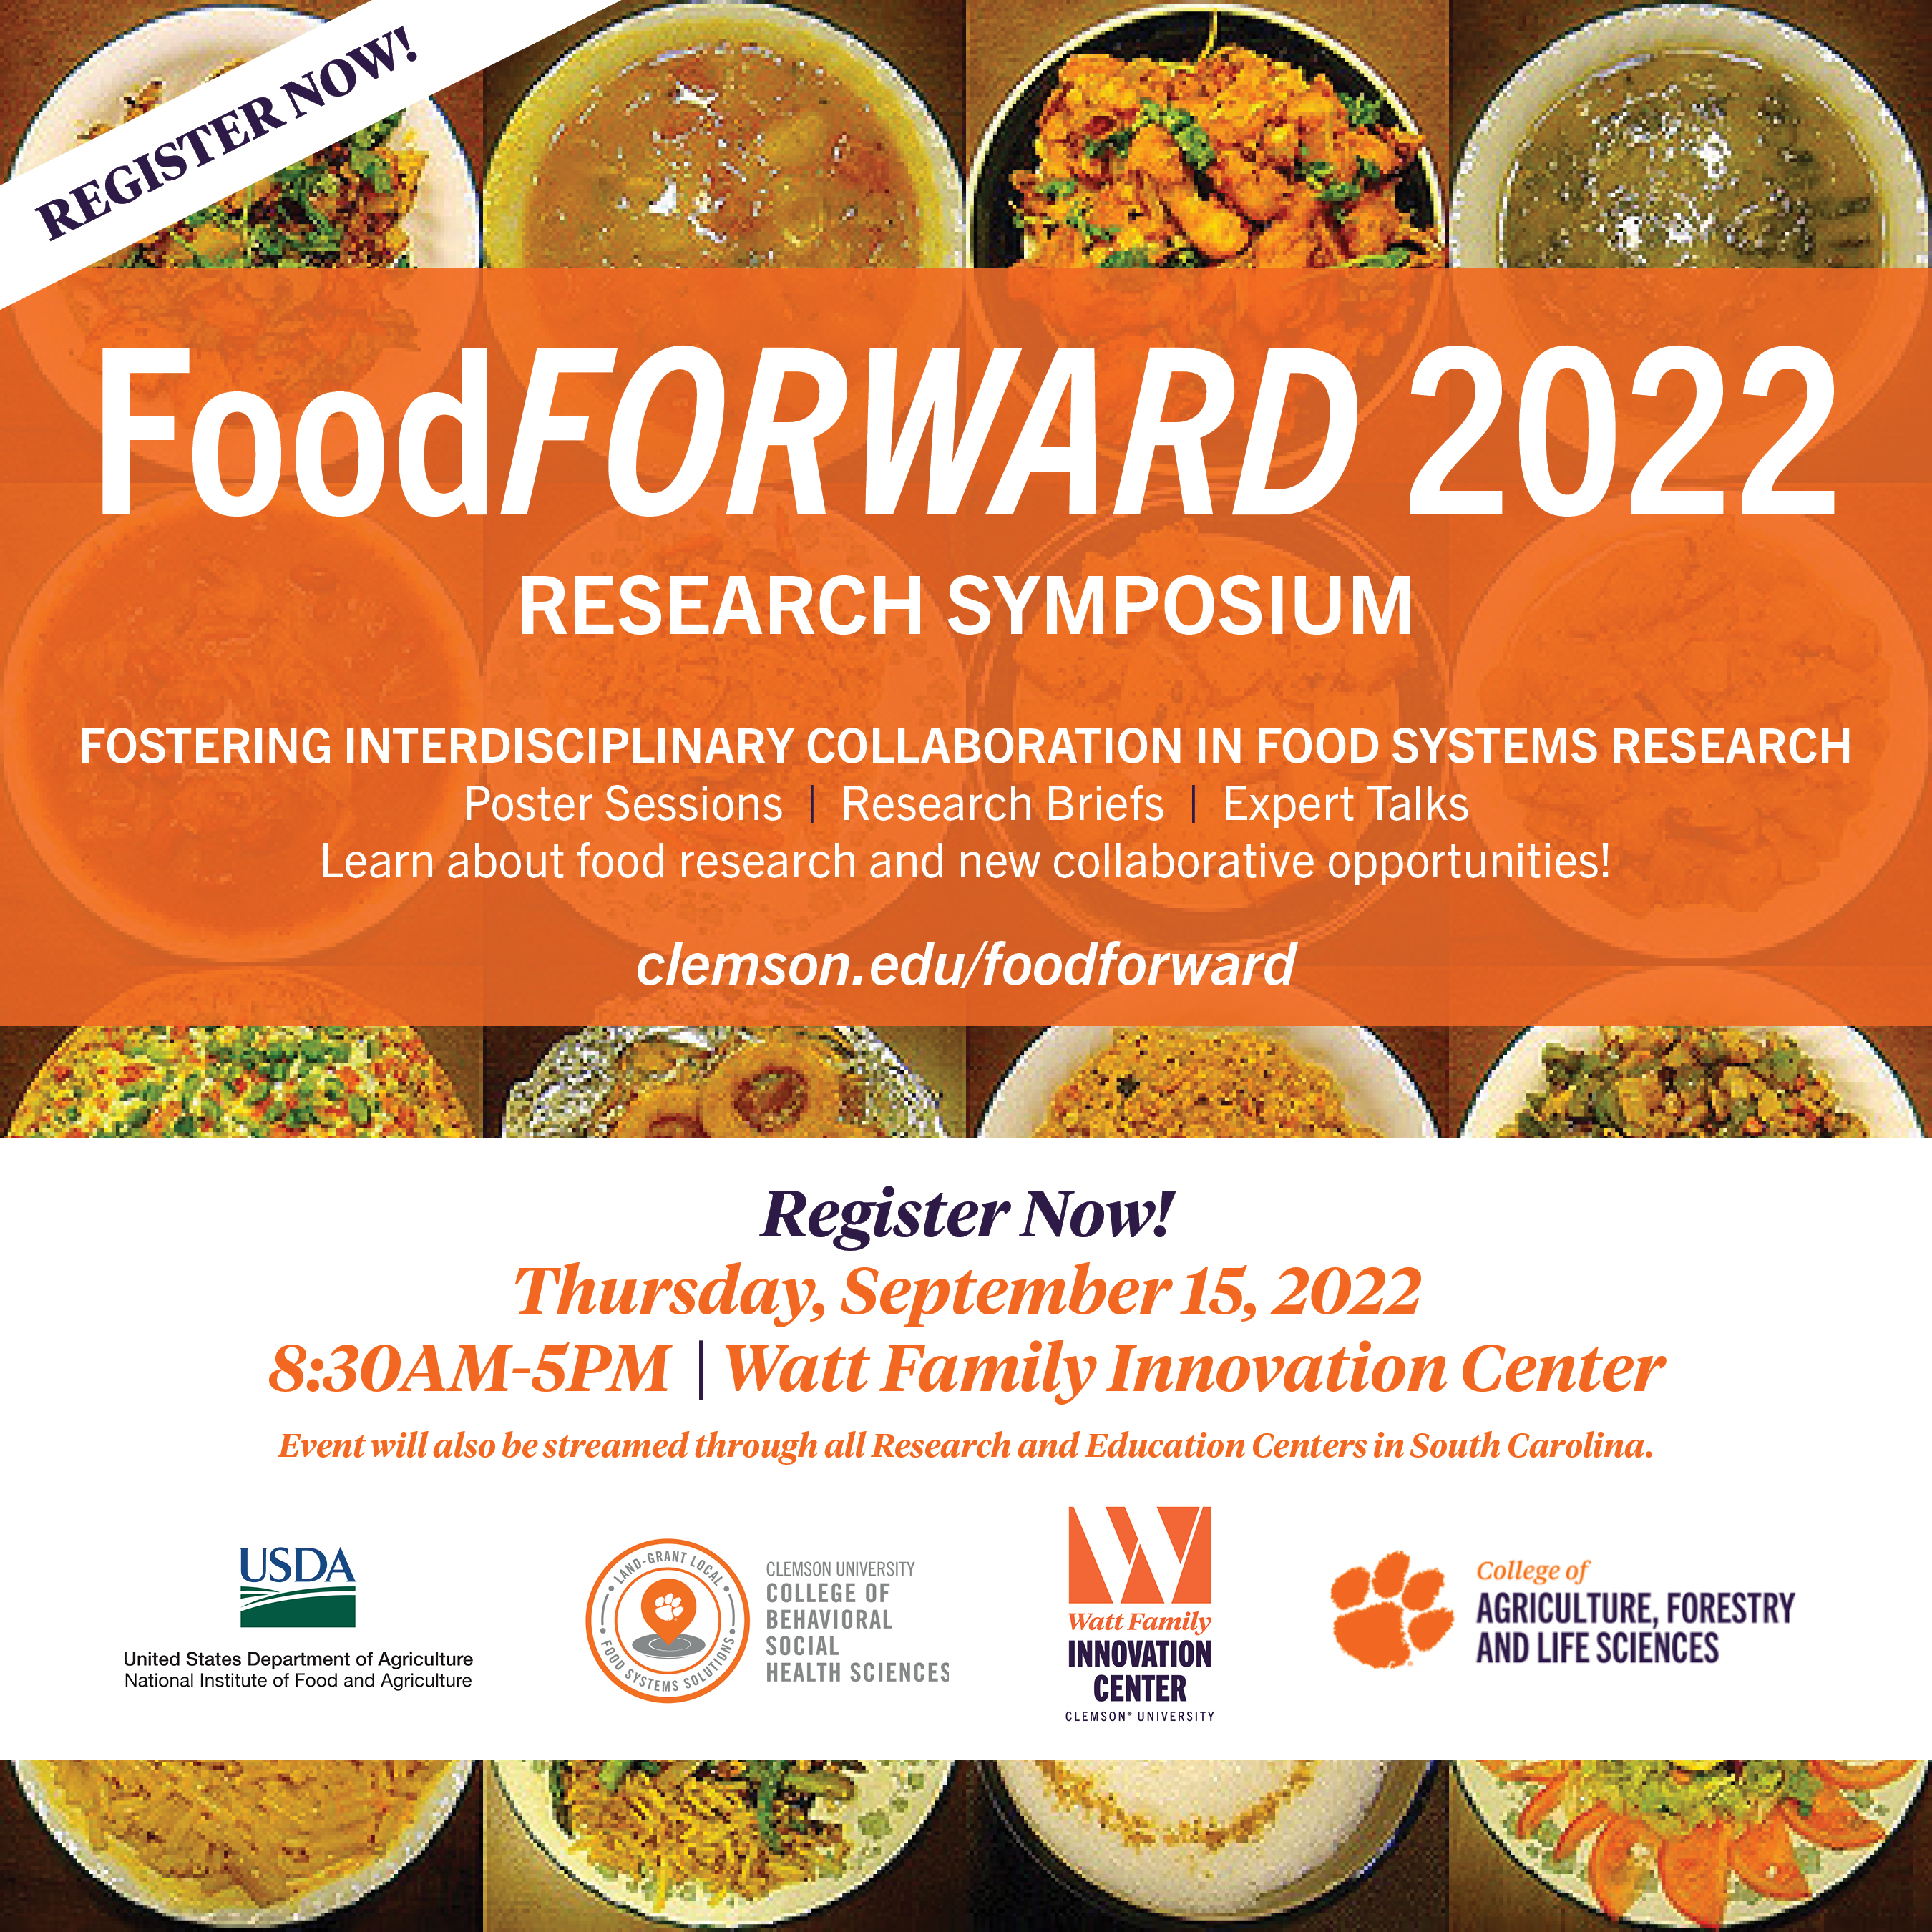 FoodFORWARD 2022 research symposium